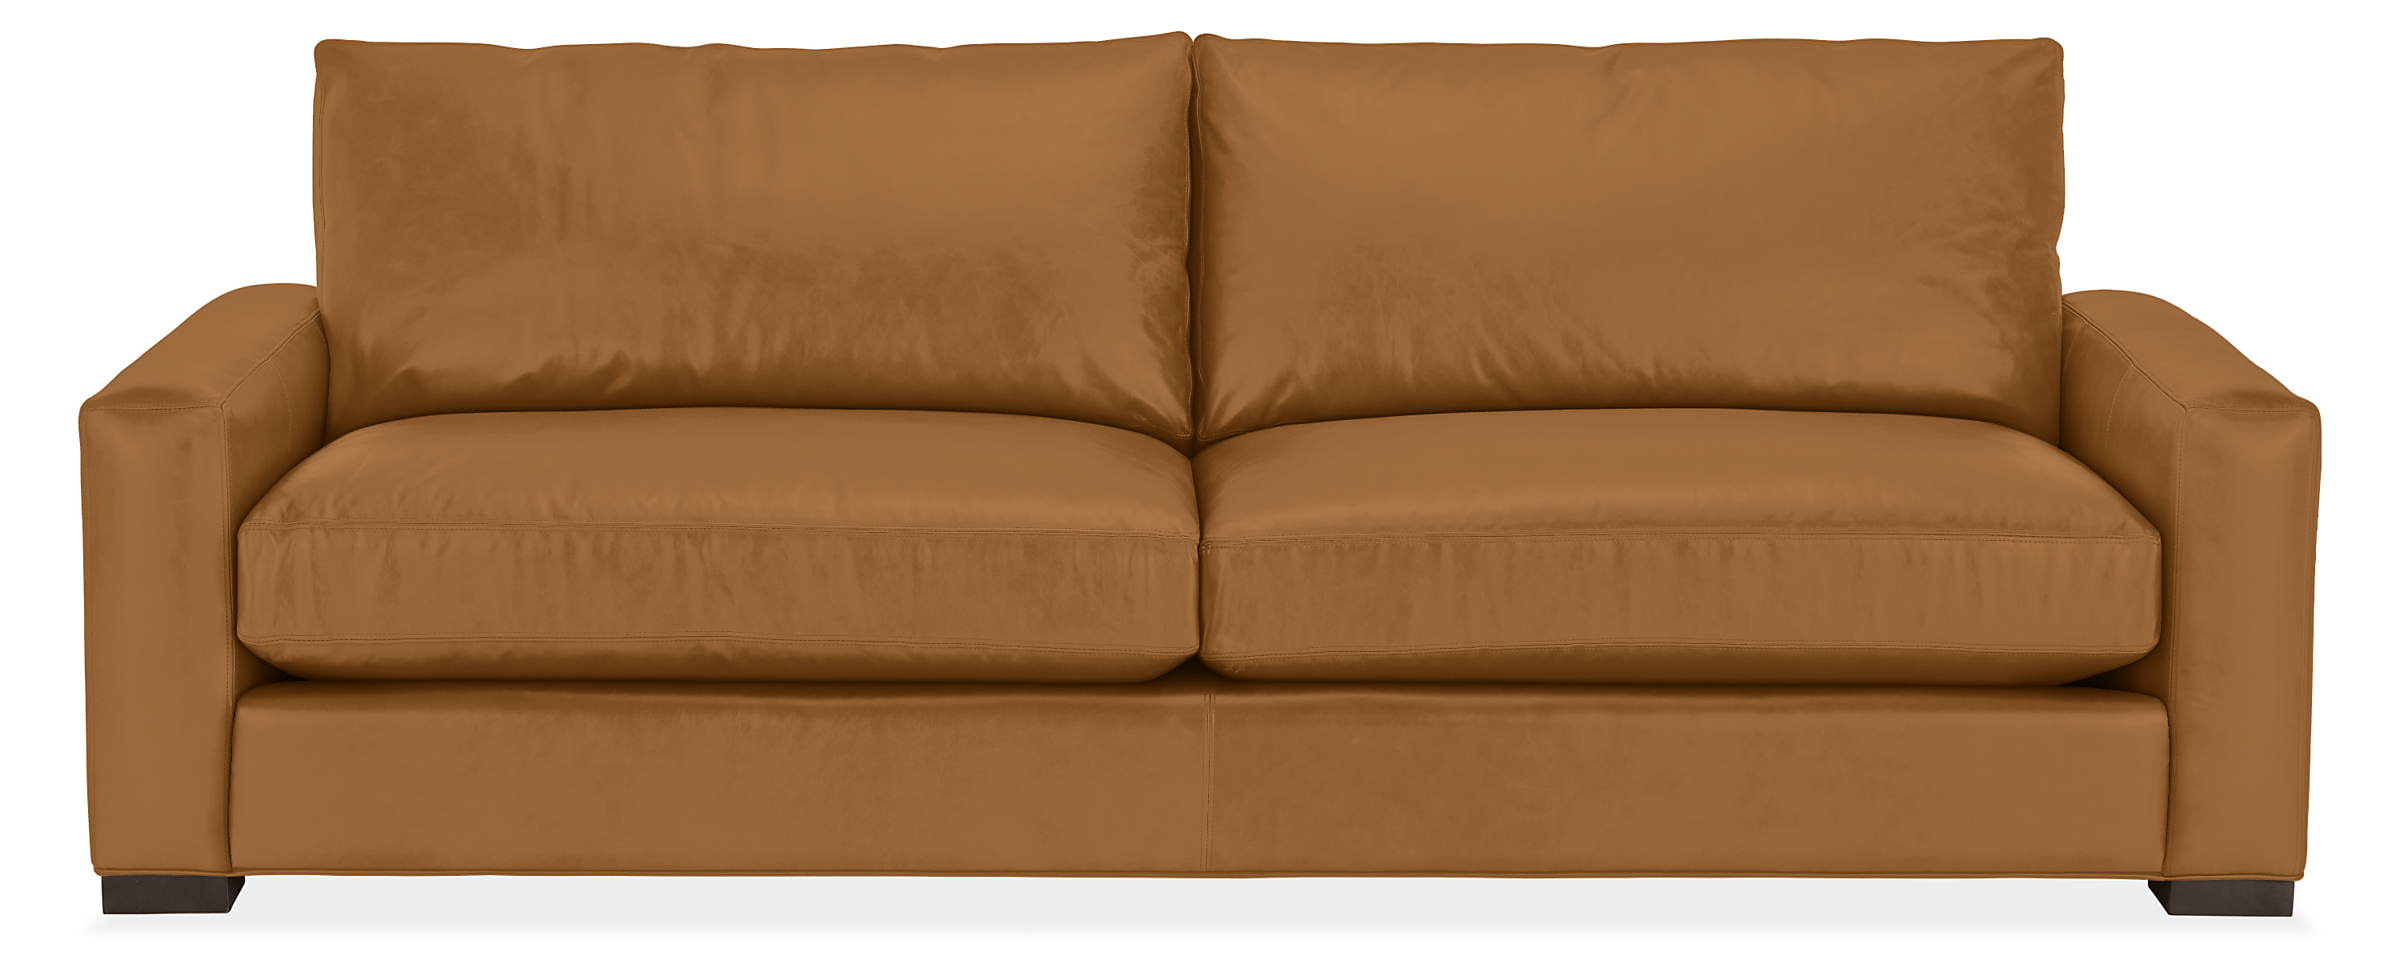 Metro Deep 98" Sofa in Urbino Camel Leather with Charcoal Legs